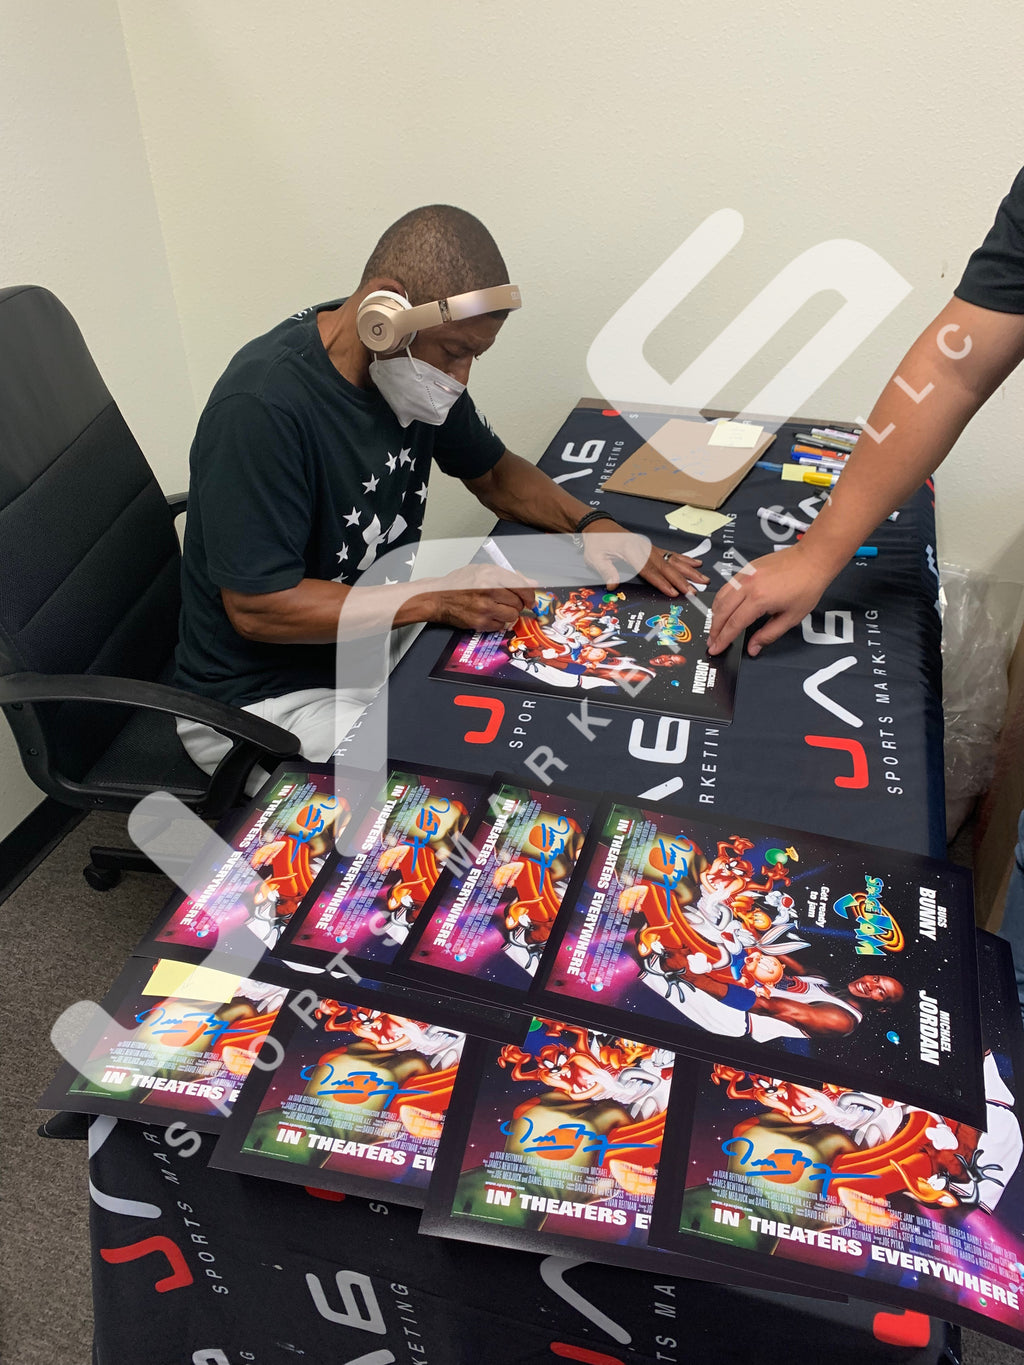 Allen Iverson Shawn Kemp auto signed 11x14 photo 76ers Cavaliers NBA P –  JAG Sports Marketing